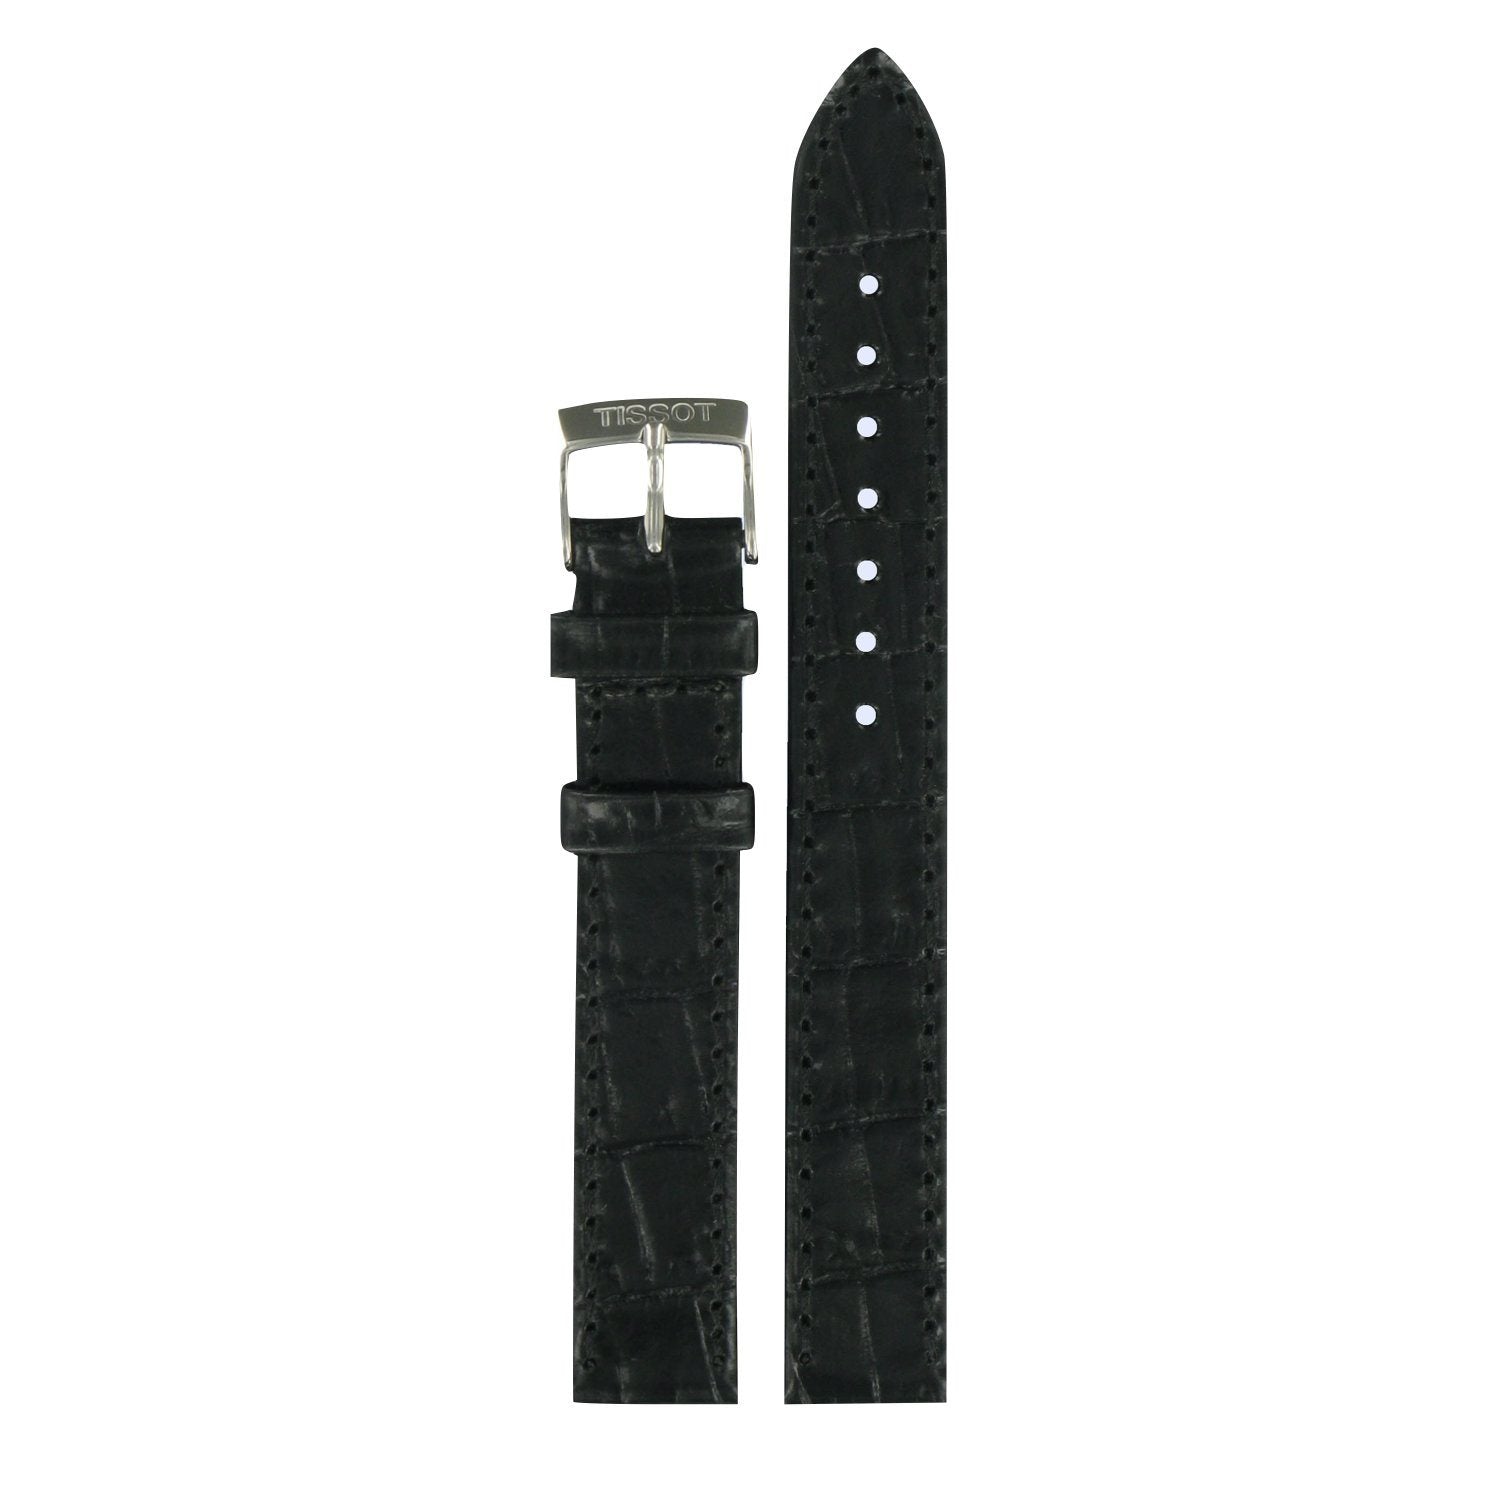 Genuine Tissot 14mm Classic Dream Black Leather Strap by Tissot